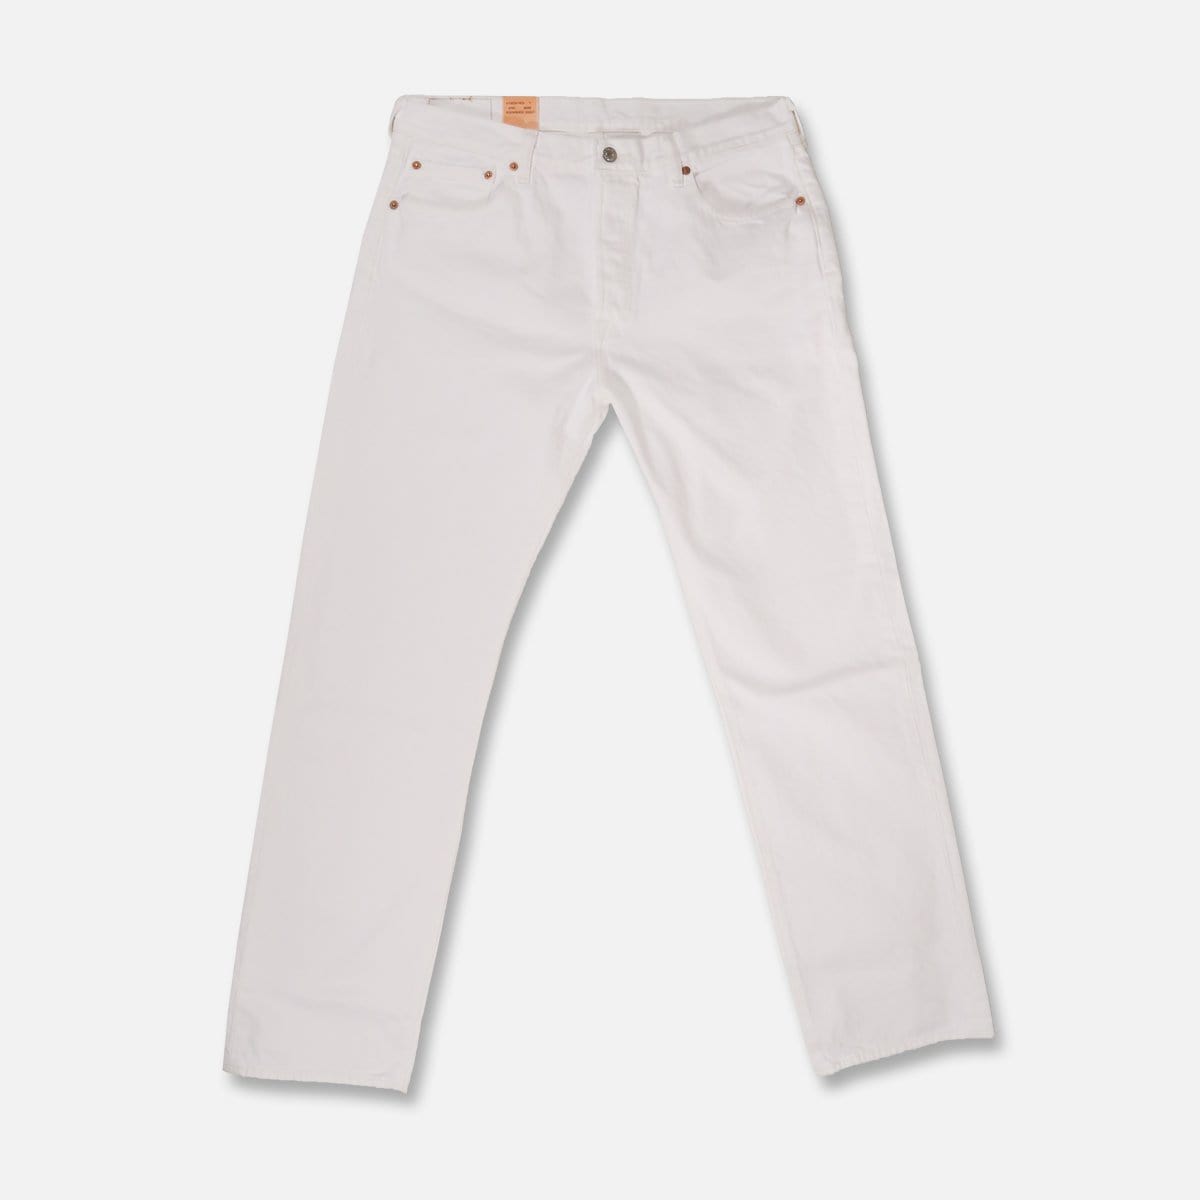 RUVilla.com is where to buy the Levi's 501 Jean (White)!